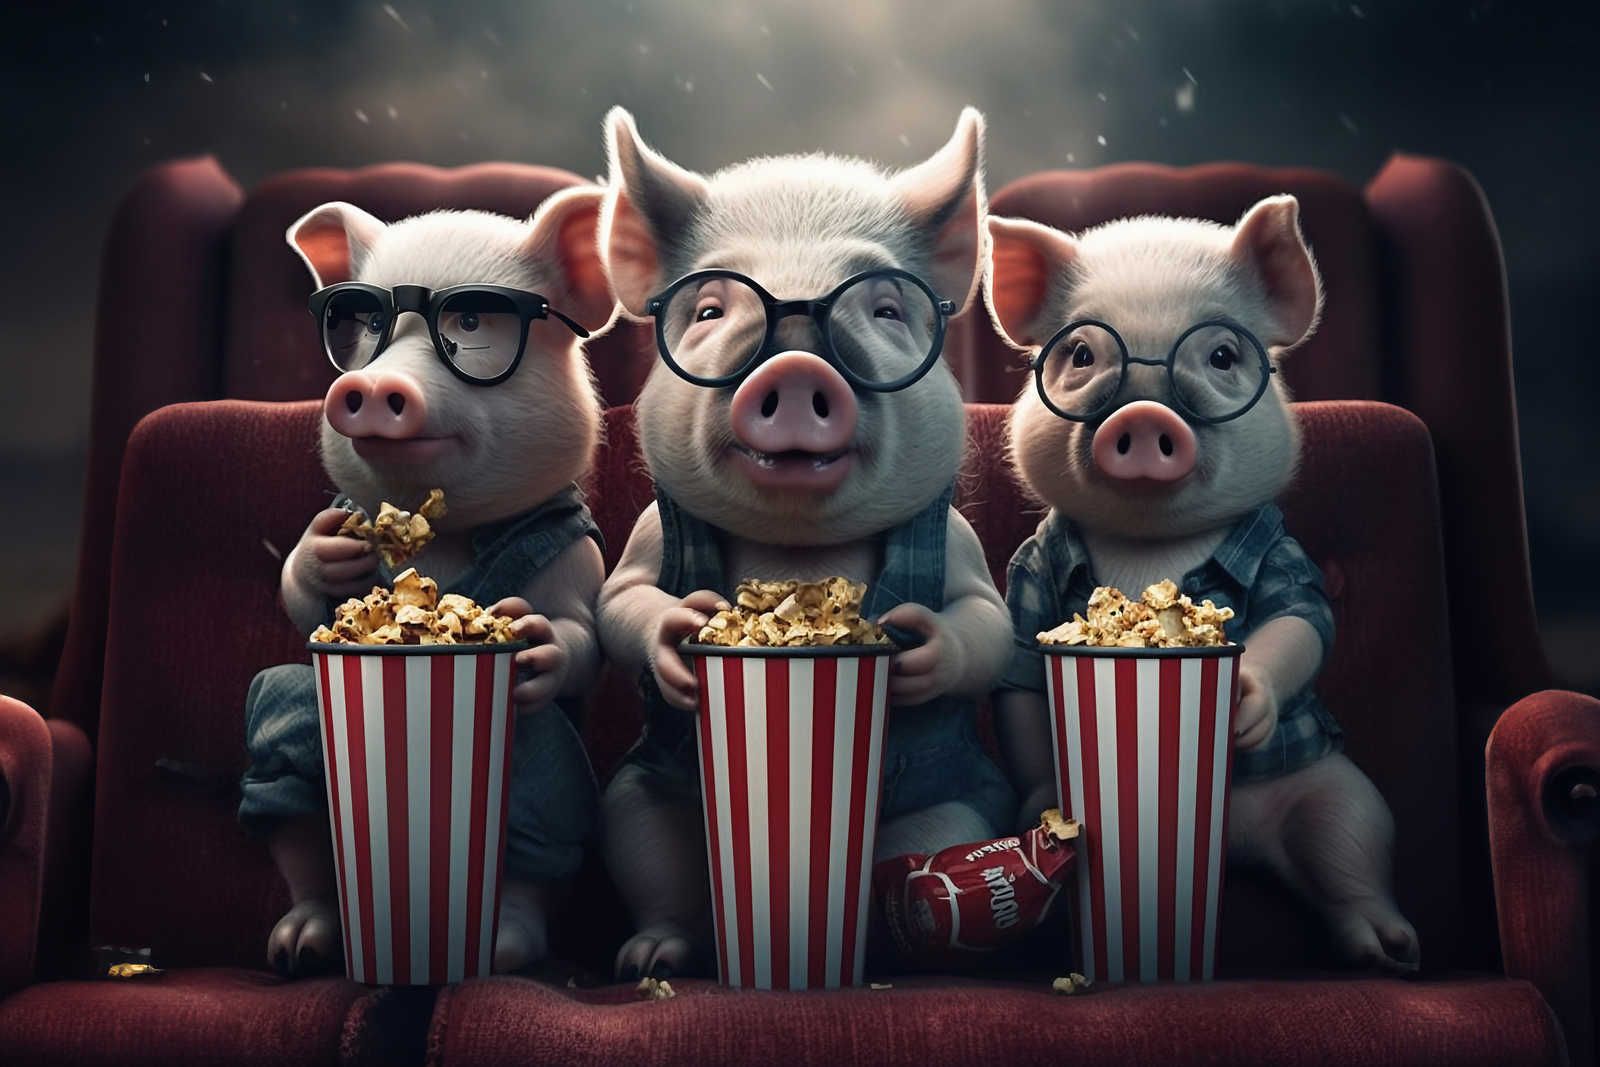             KI-Leinwandbild »popcorn pigs« – 120 cm x 80 cm
        